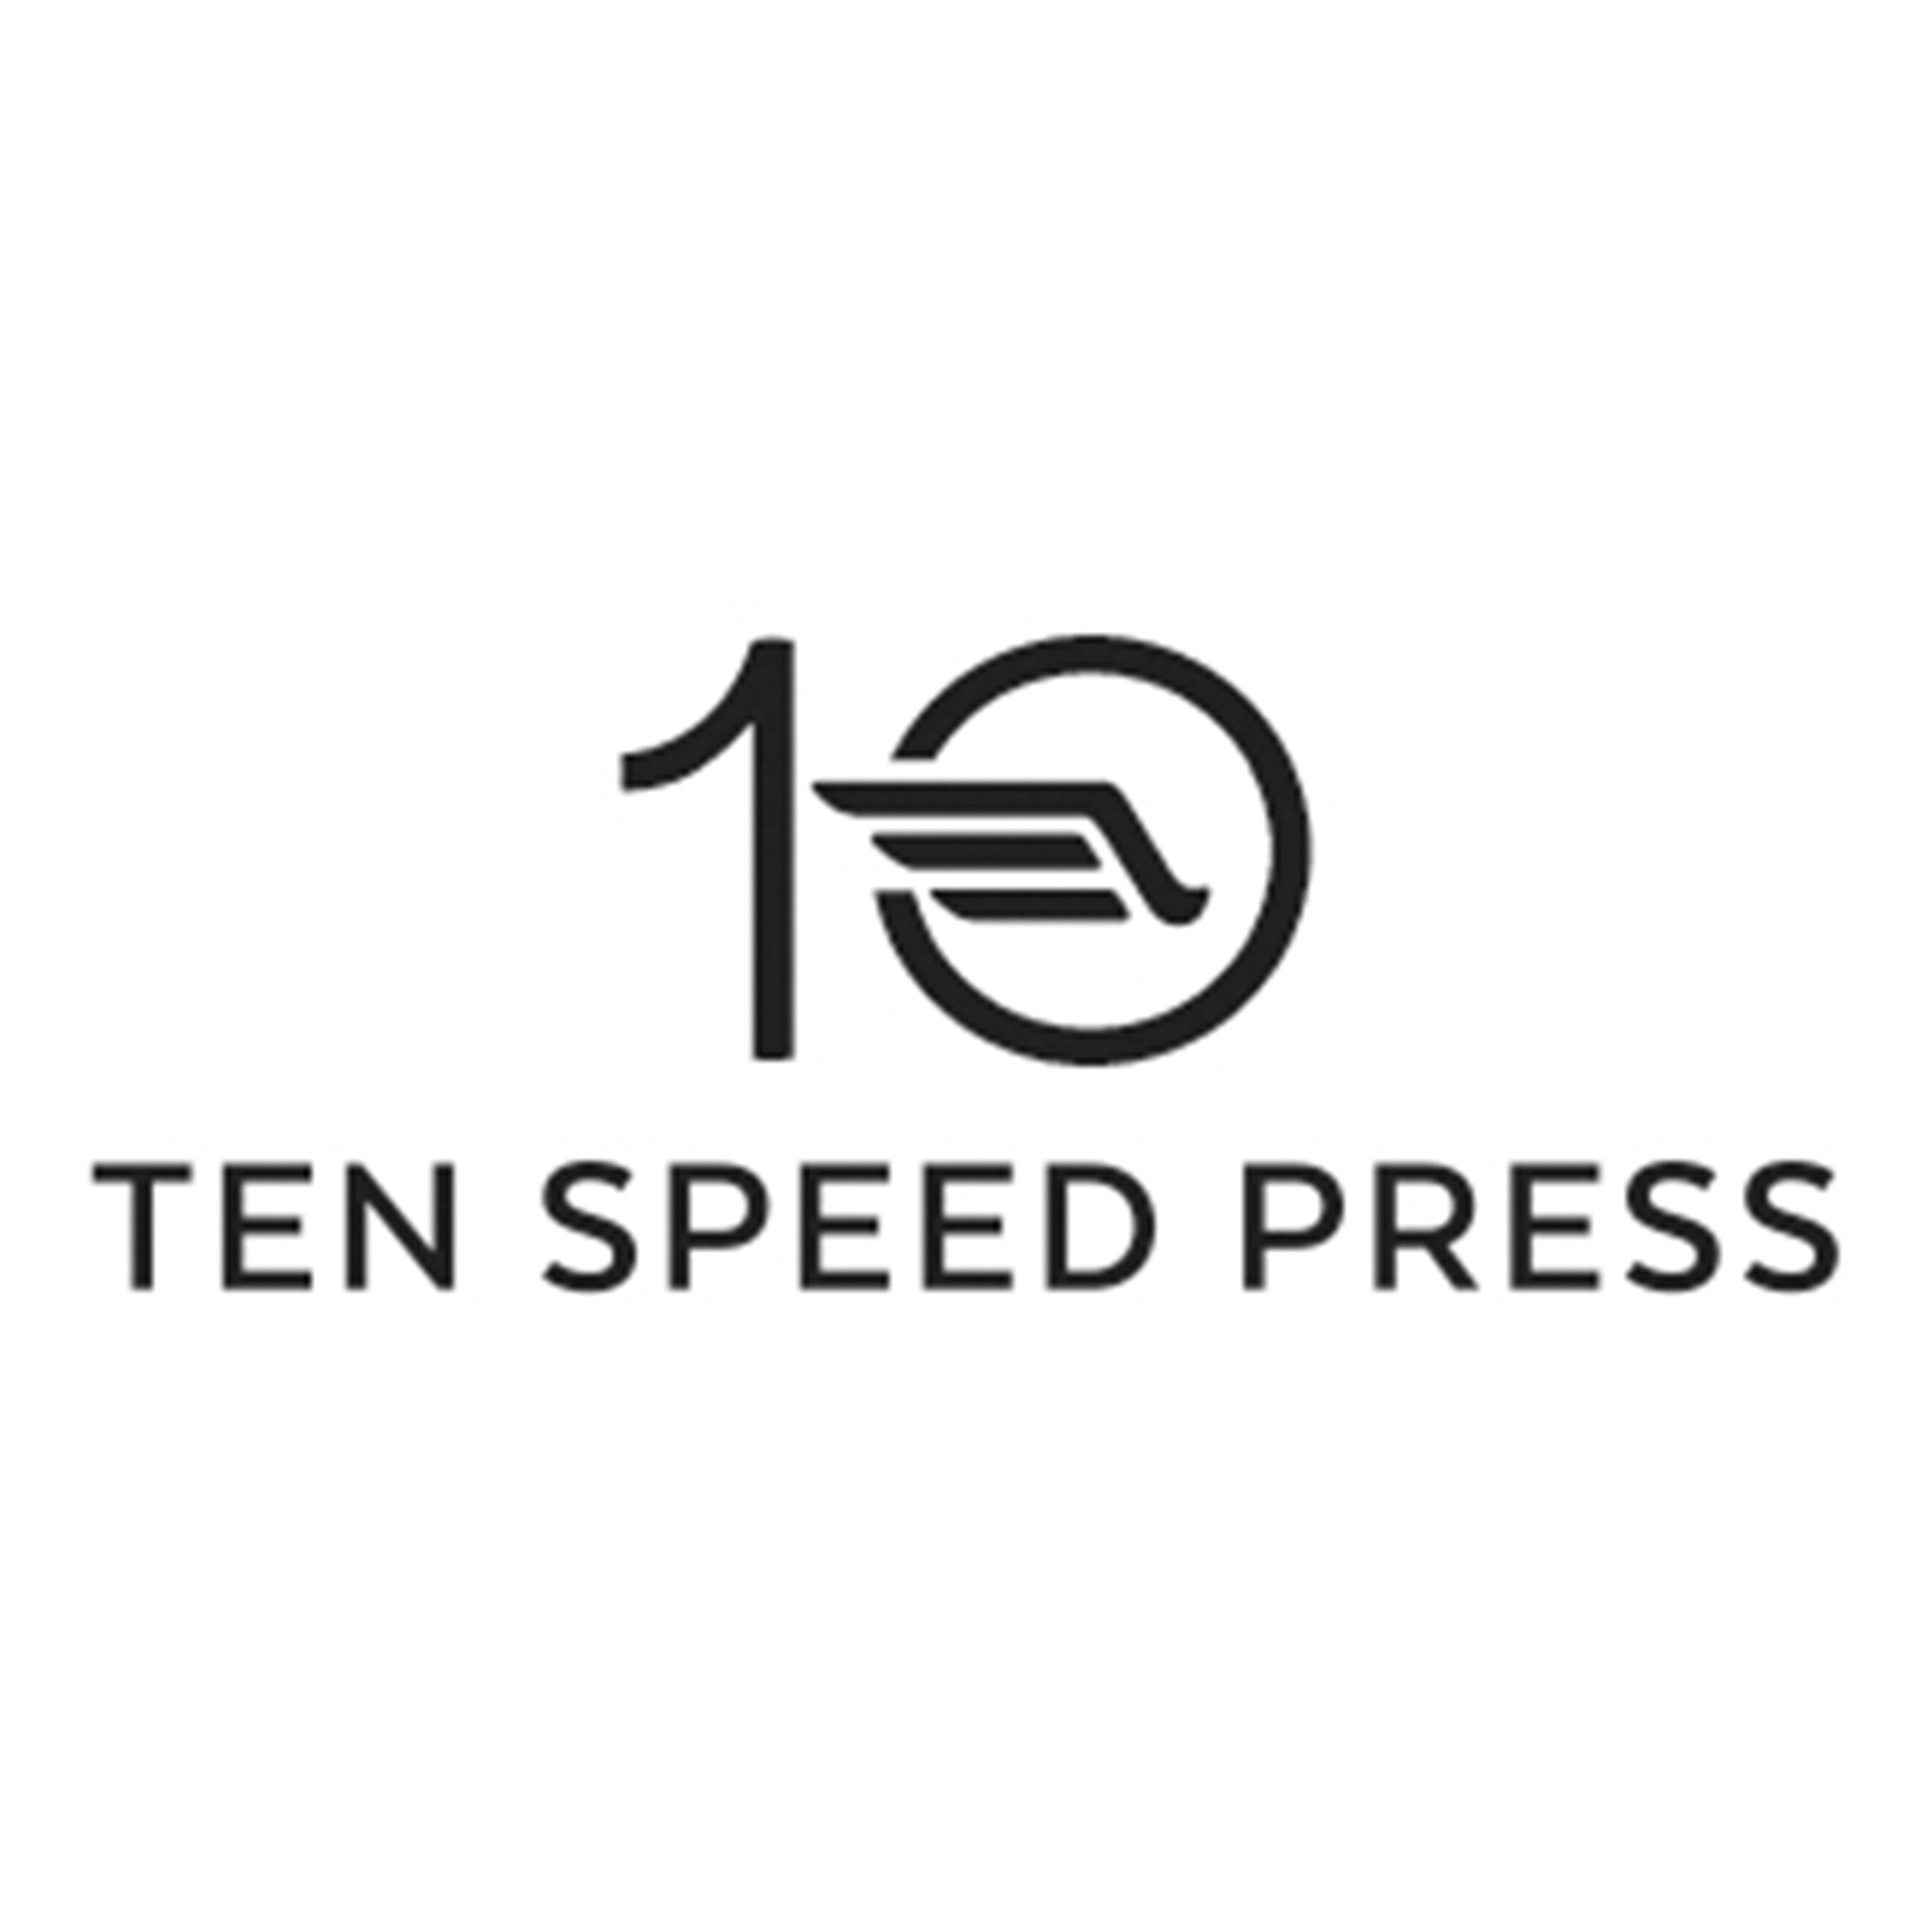 New_10speedpress_logo.jpg